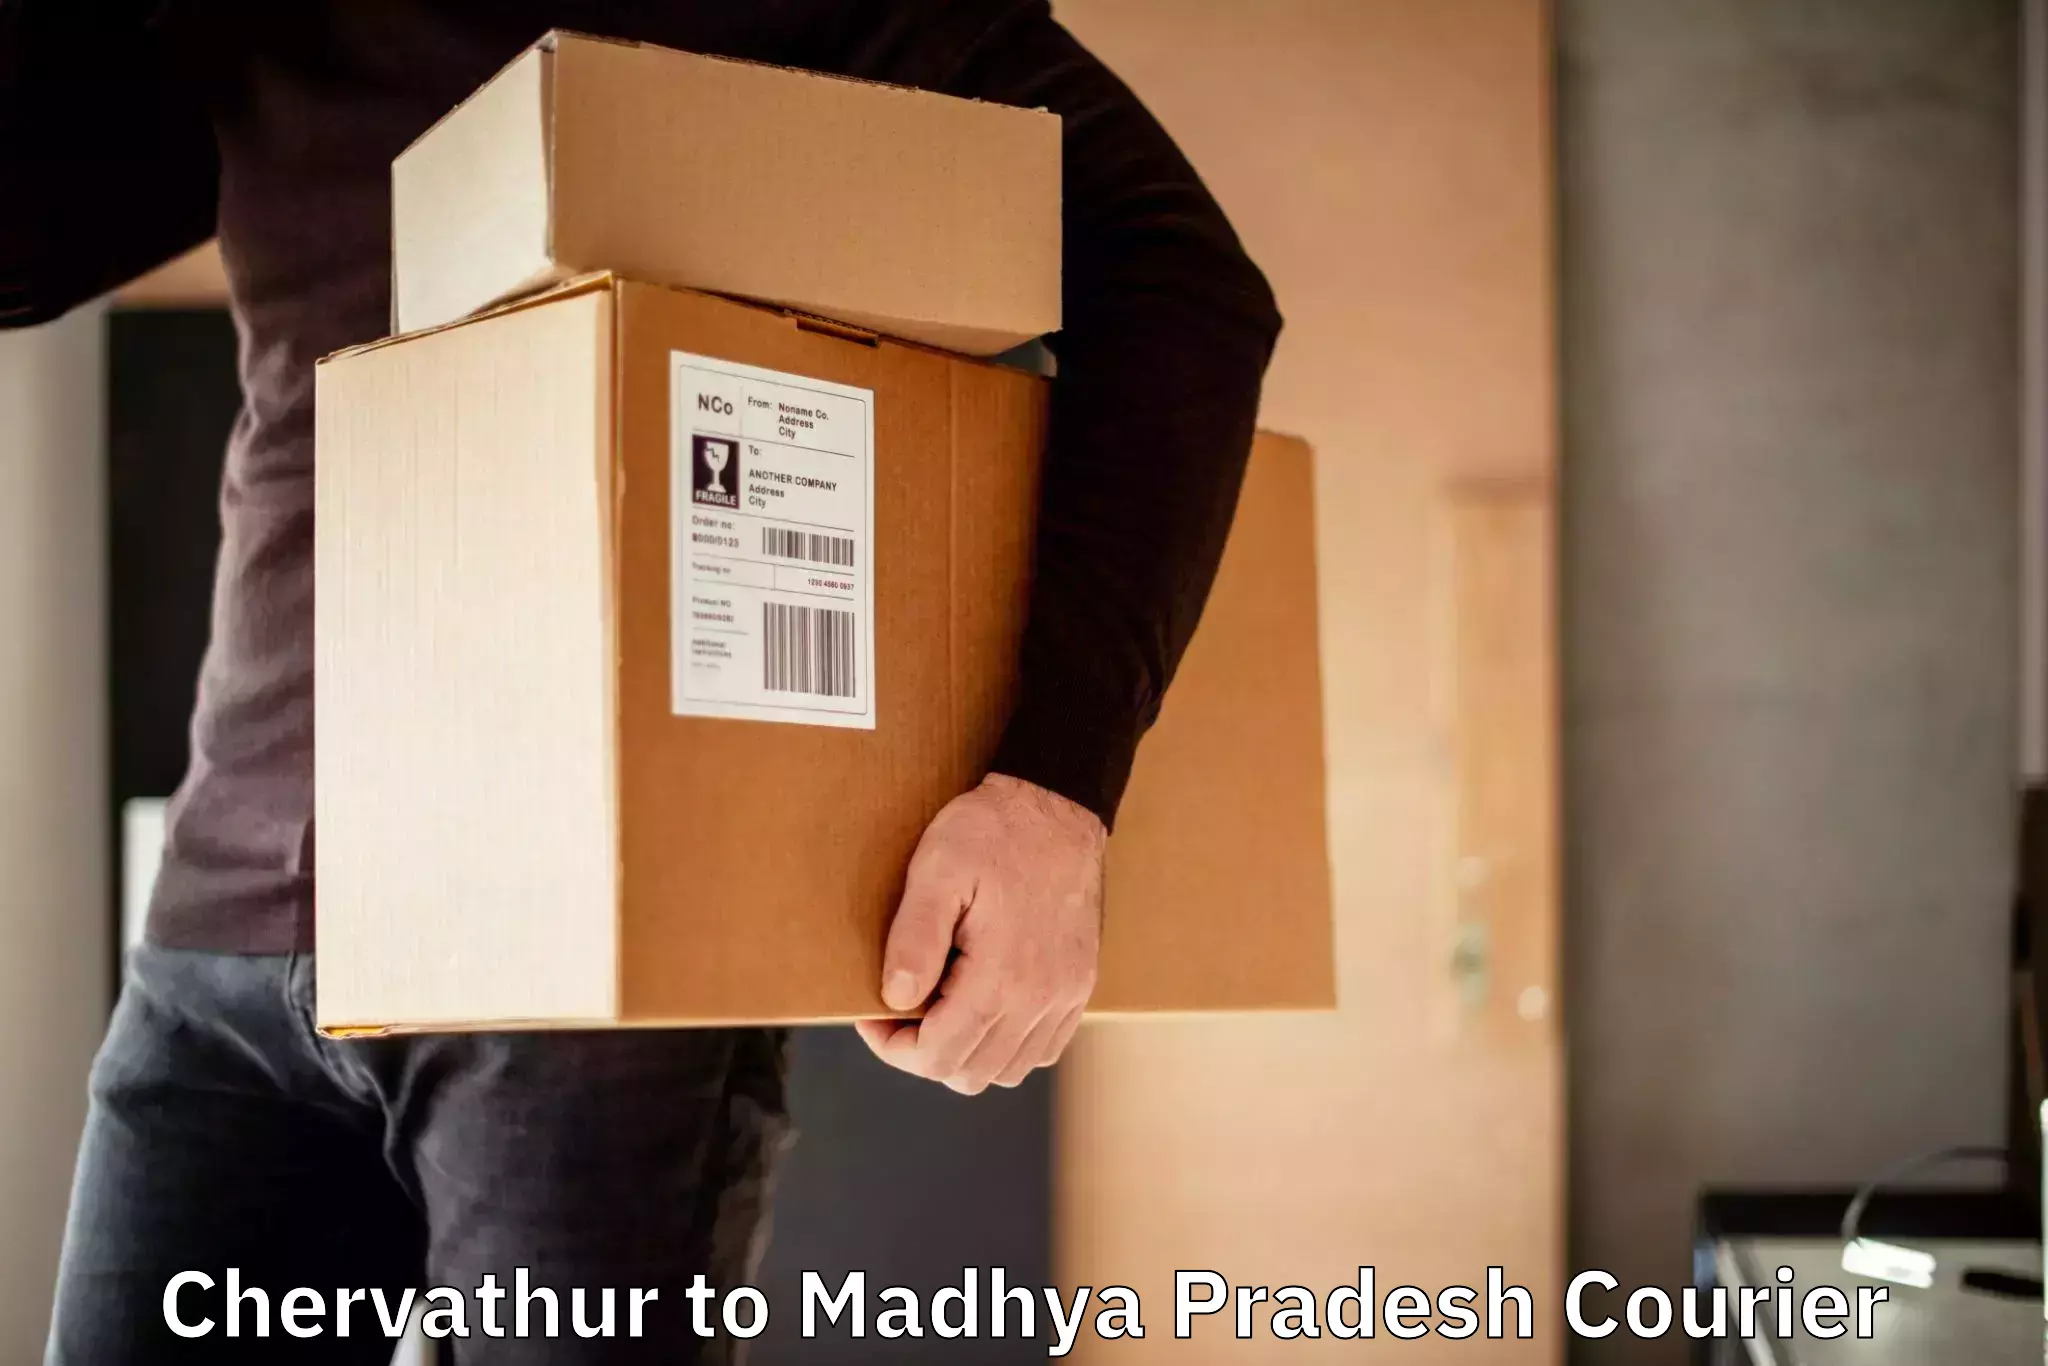 Courier service booking Chervathur to Guna